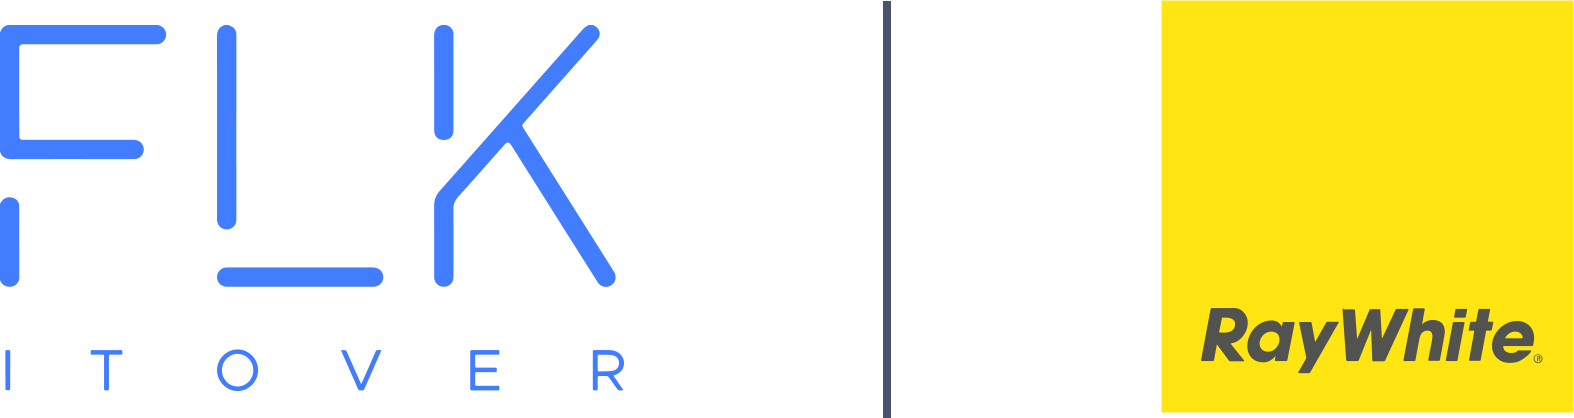 raywhite_logo header